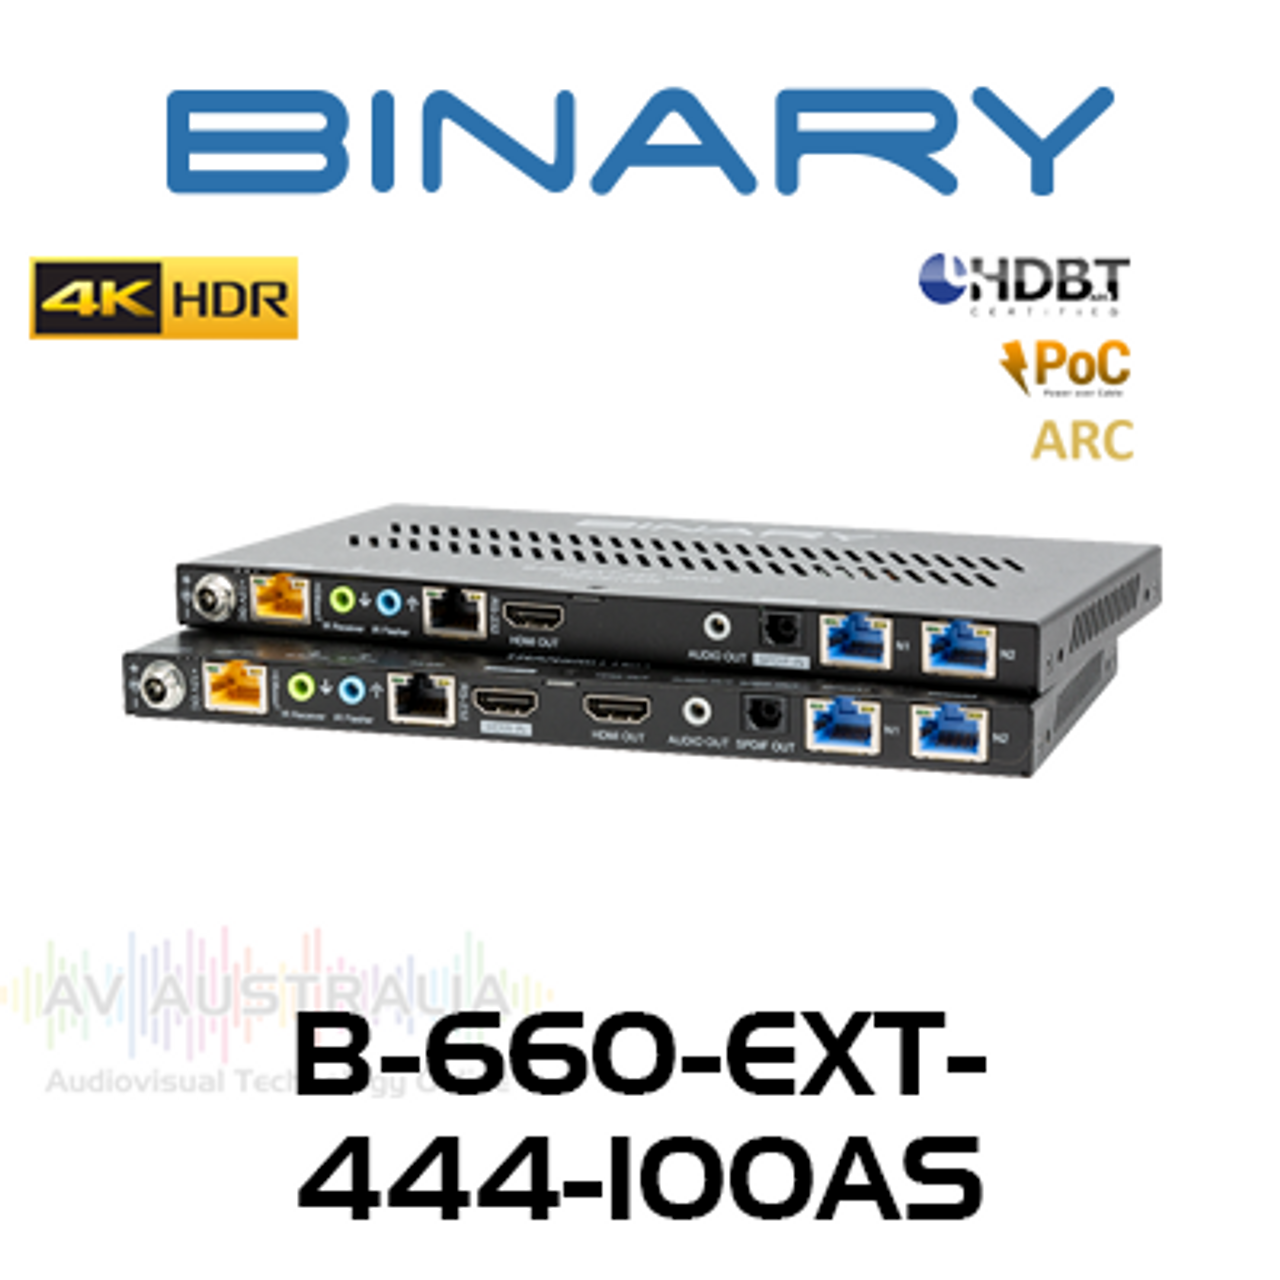 Binary B-660 Series 4K HDBaseT Extender with ARC (100m)